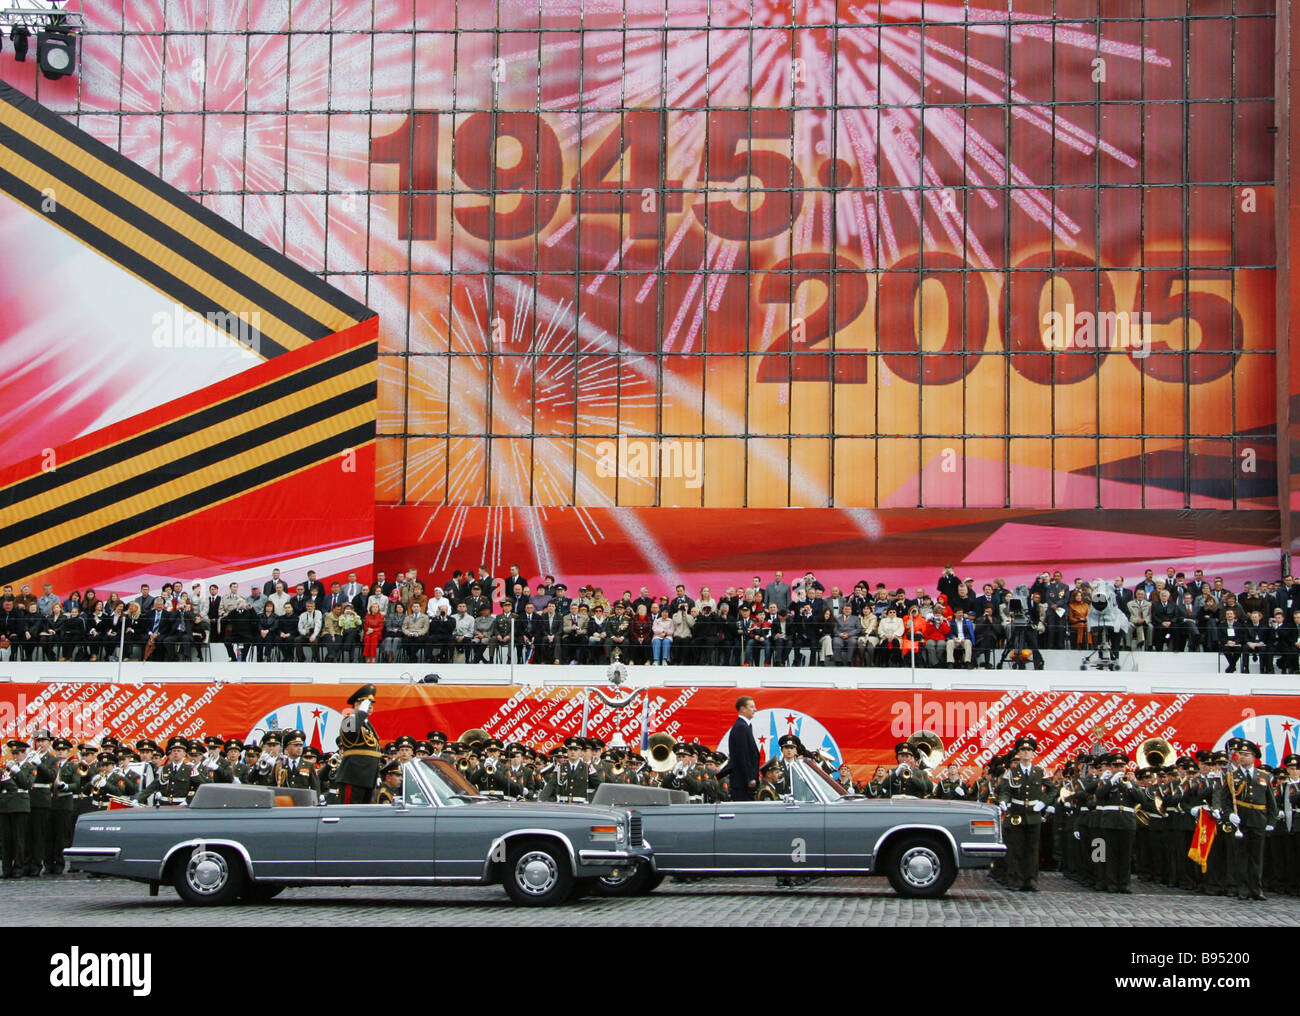 9 мая 60. Парад Победы 2005. Парад 2005 года на красной площади. Парад Победы 2005 года. Парад Победы в 2005 году в Москве.